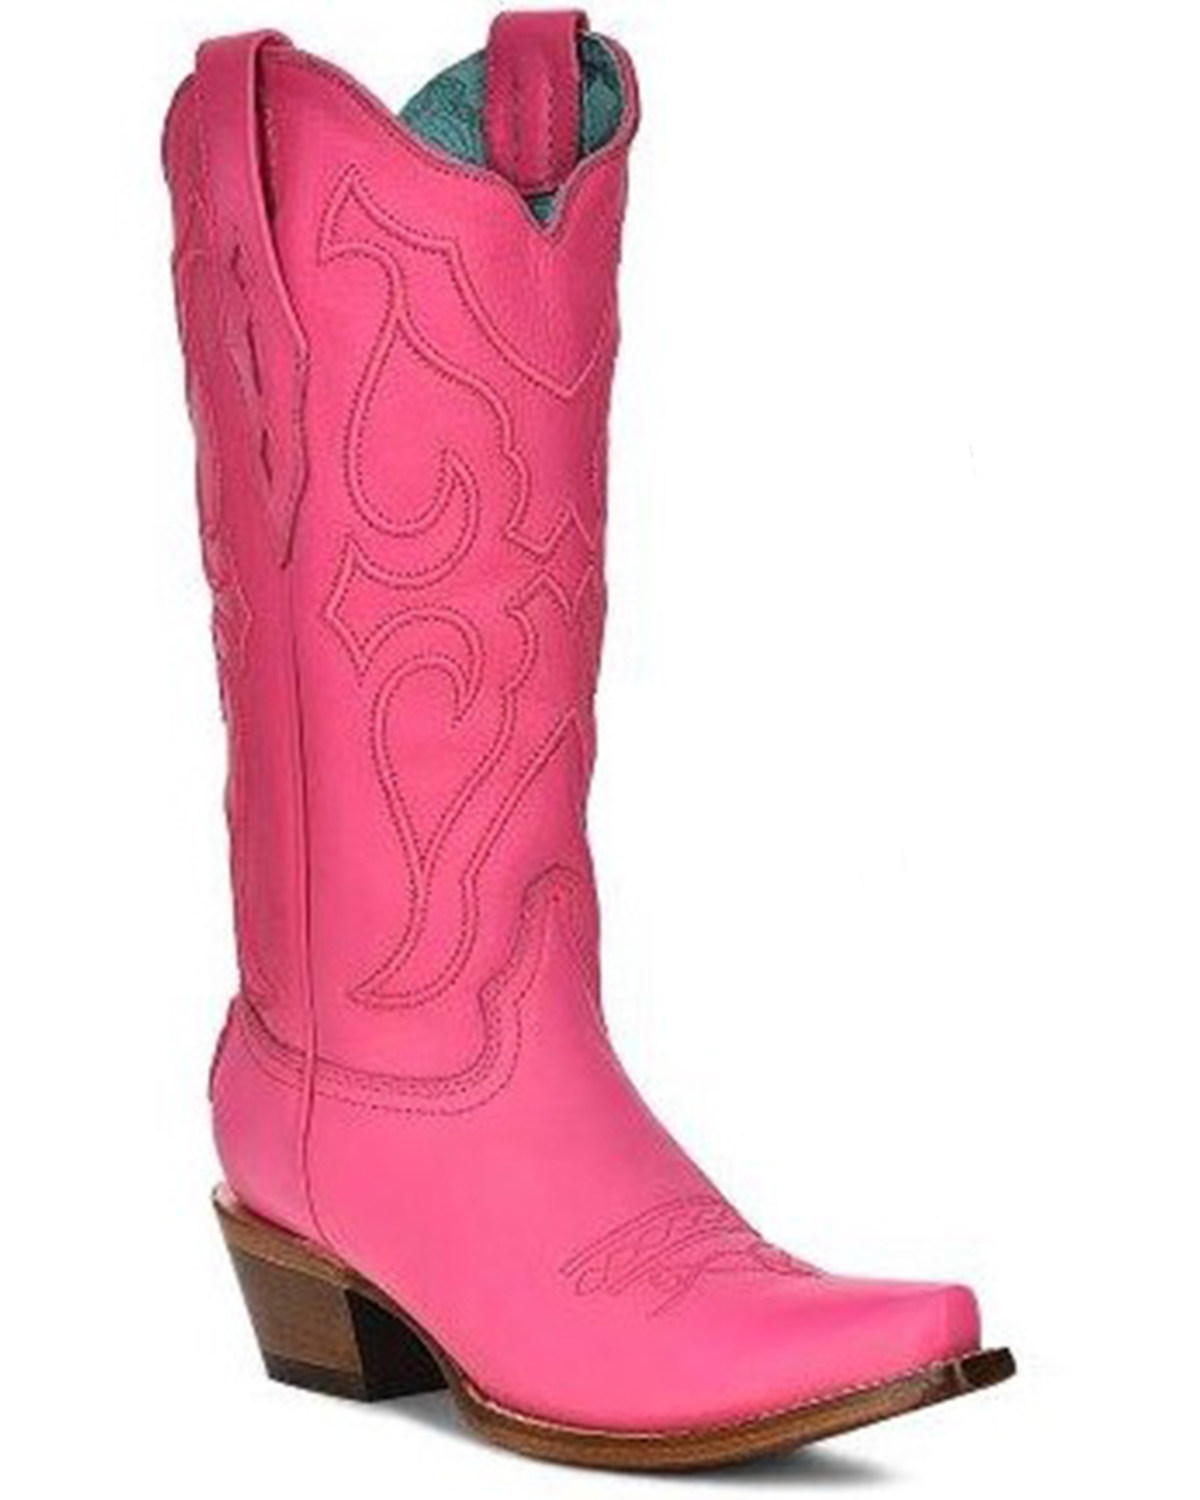 Corral Women's Fuchsia Western Boots - Snip Toe